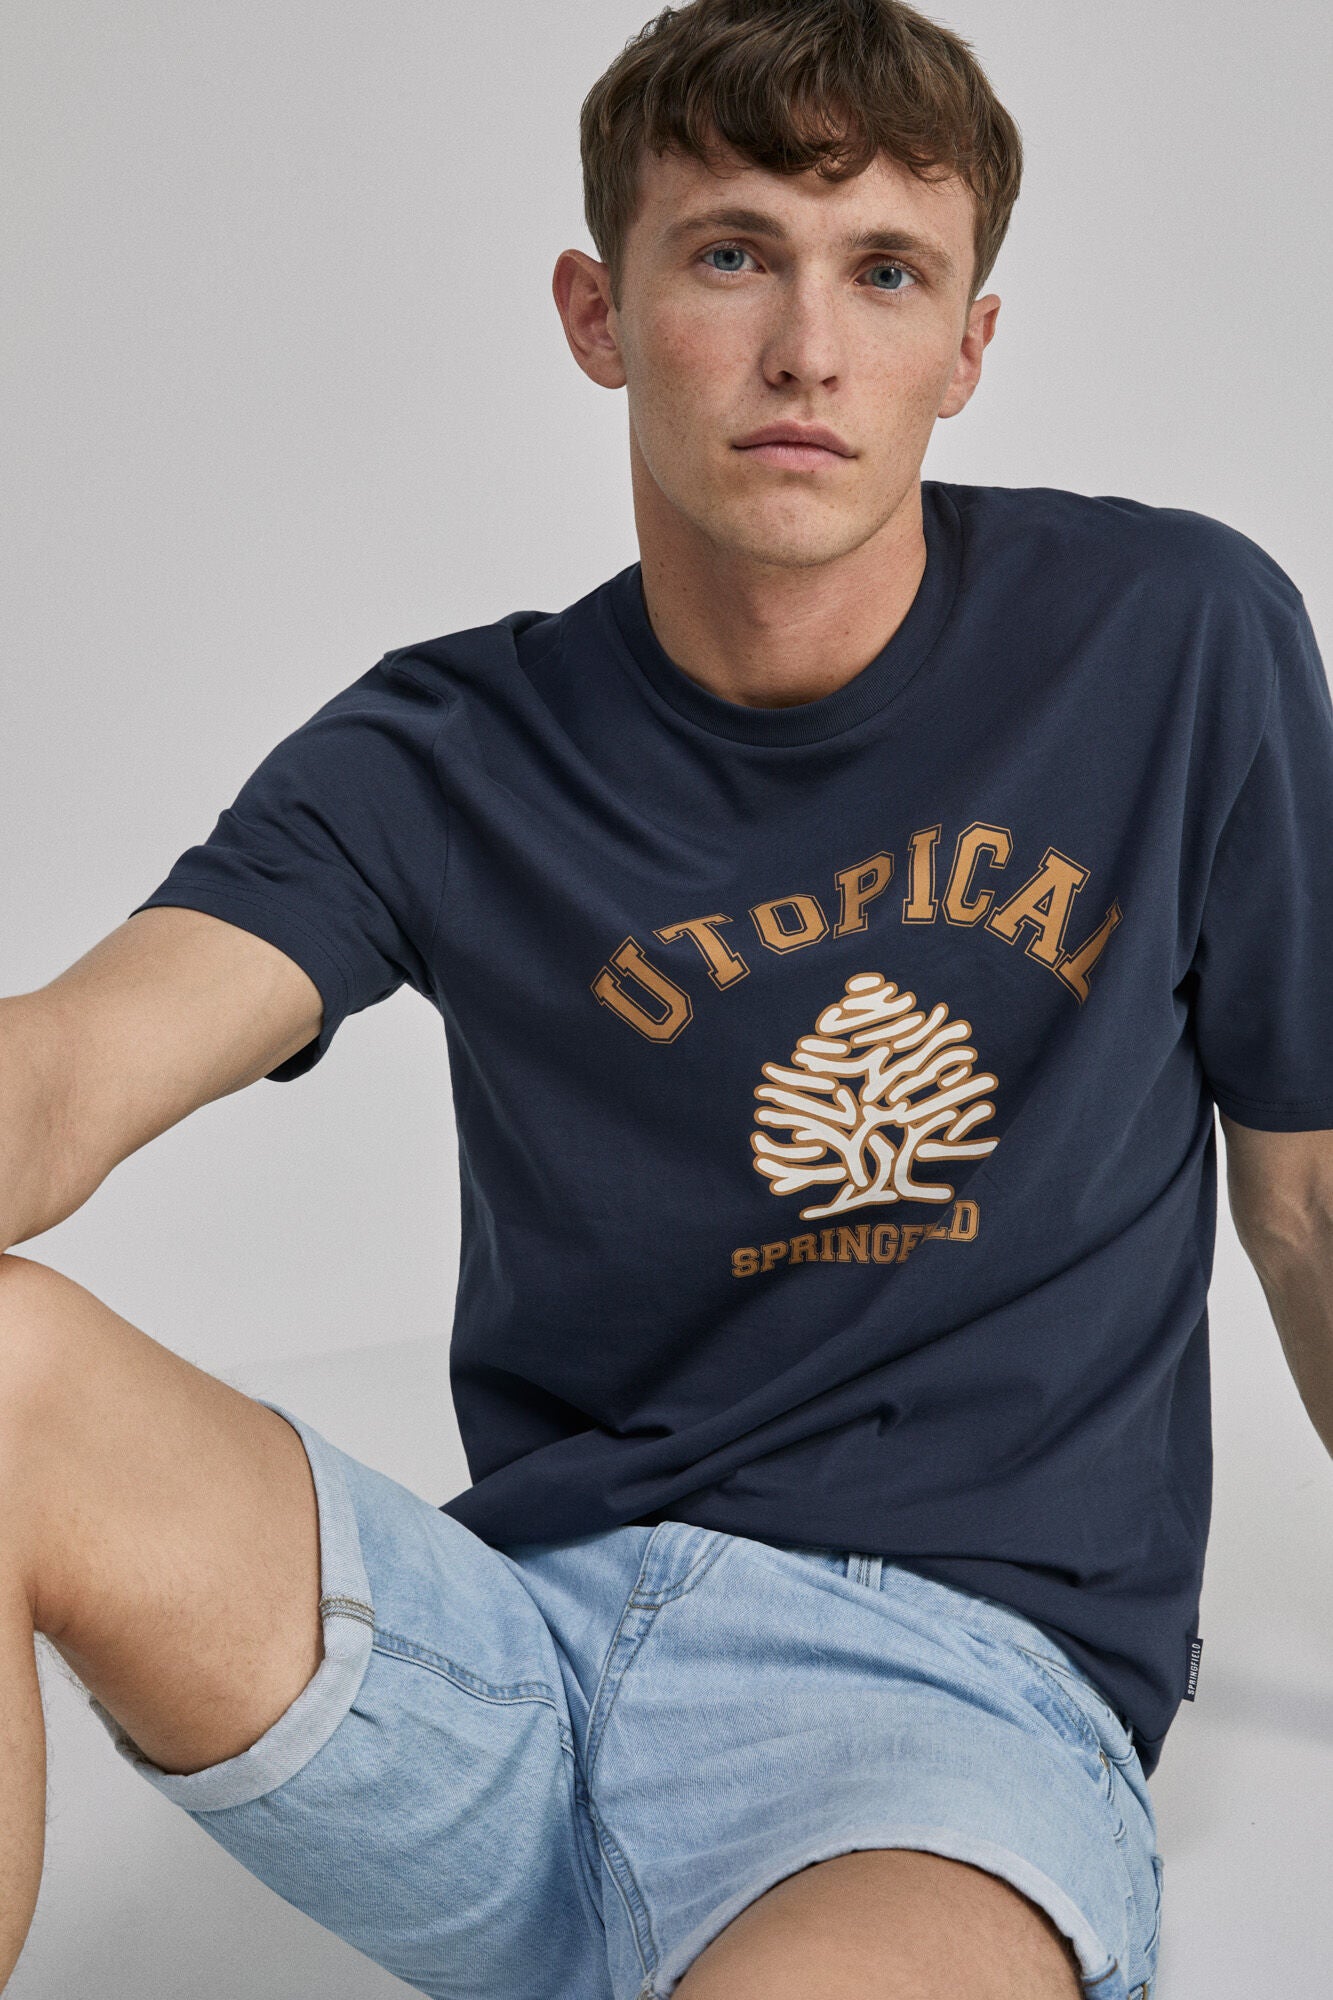 Blue Utopical Printed T-shirt